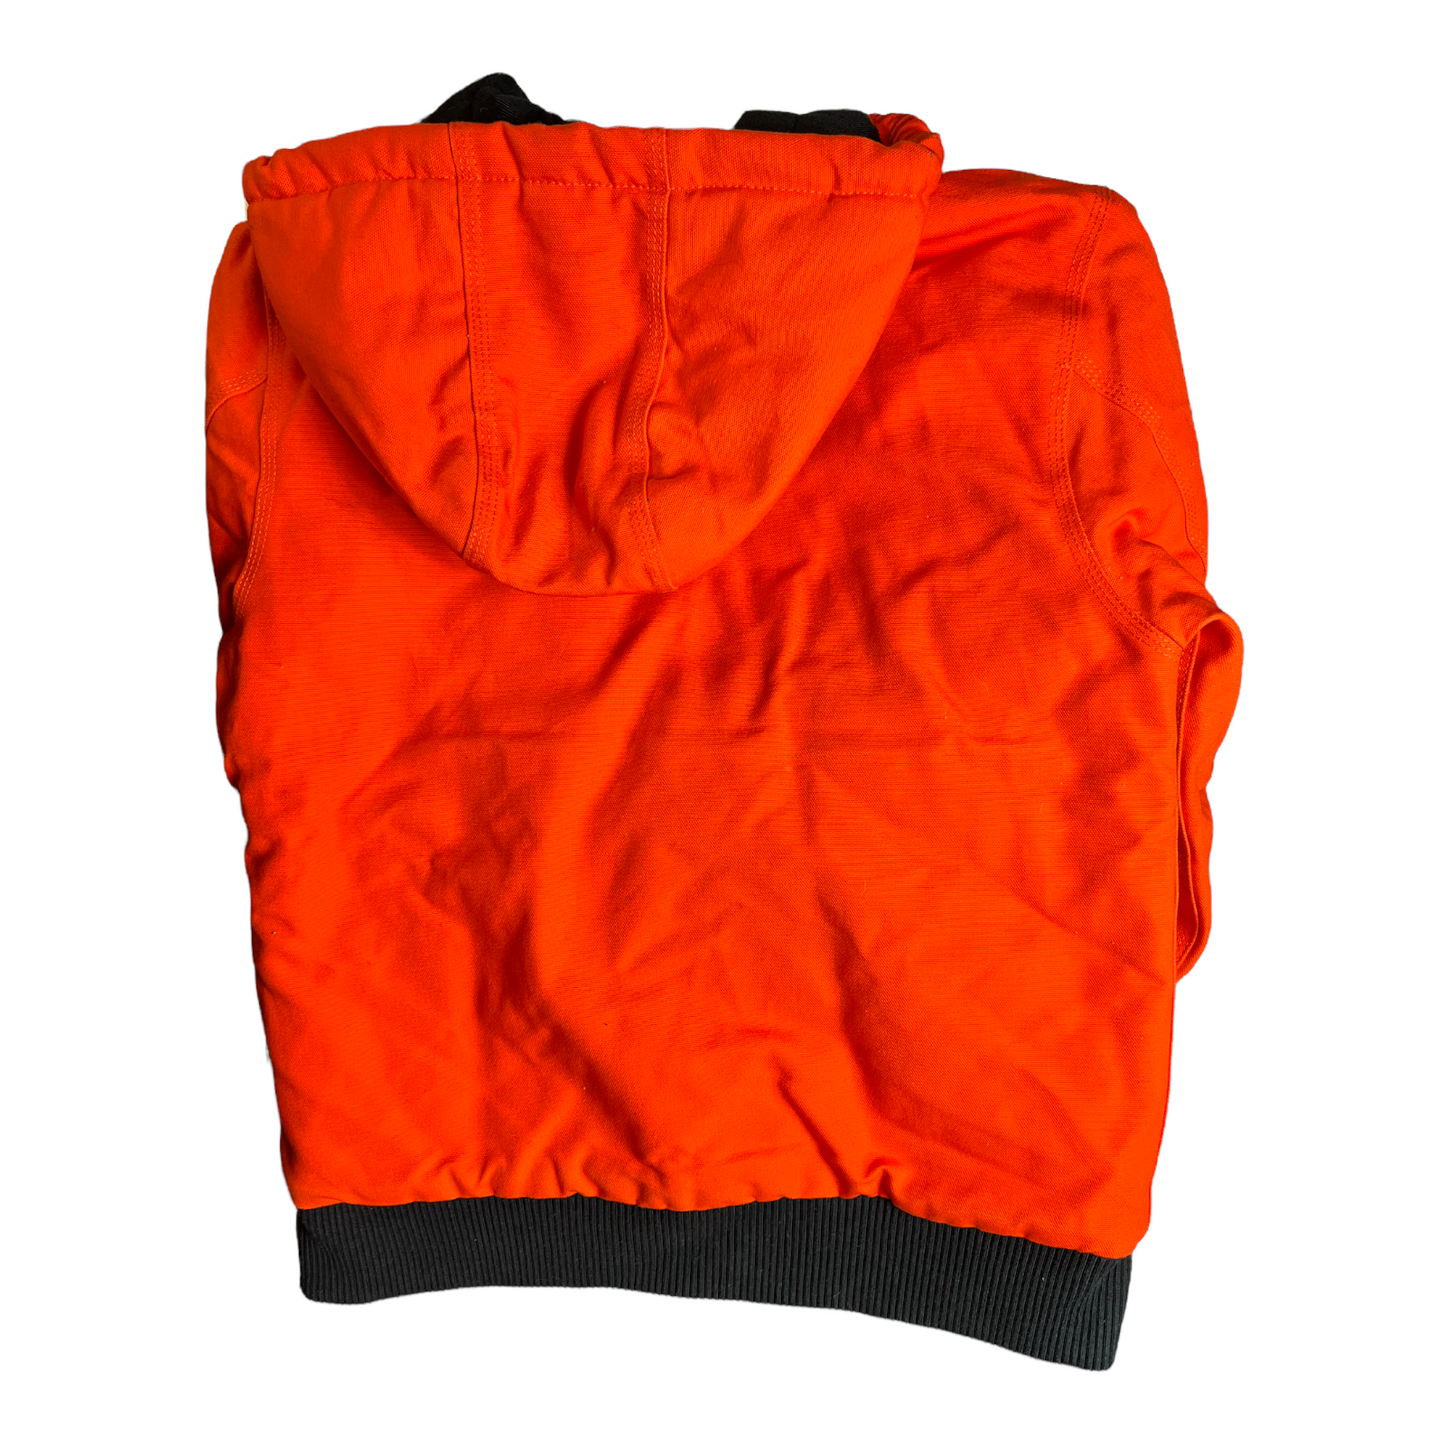 NEW CarHartt Orange Children Coat, Kids Size 10/12